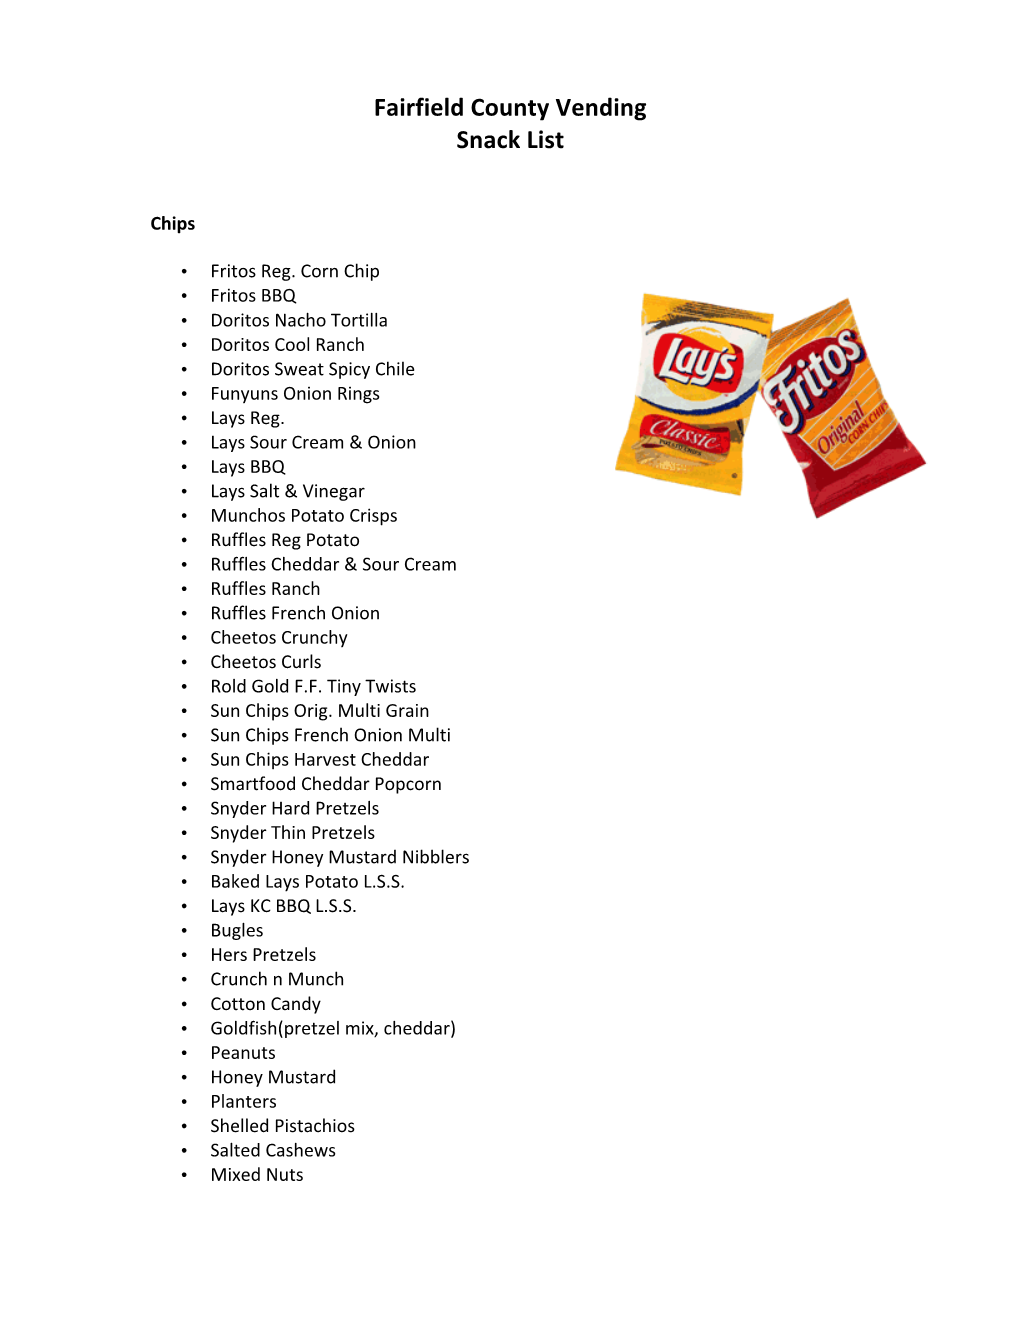 Fairfield County Vending Snack List